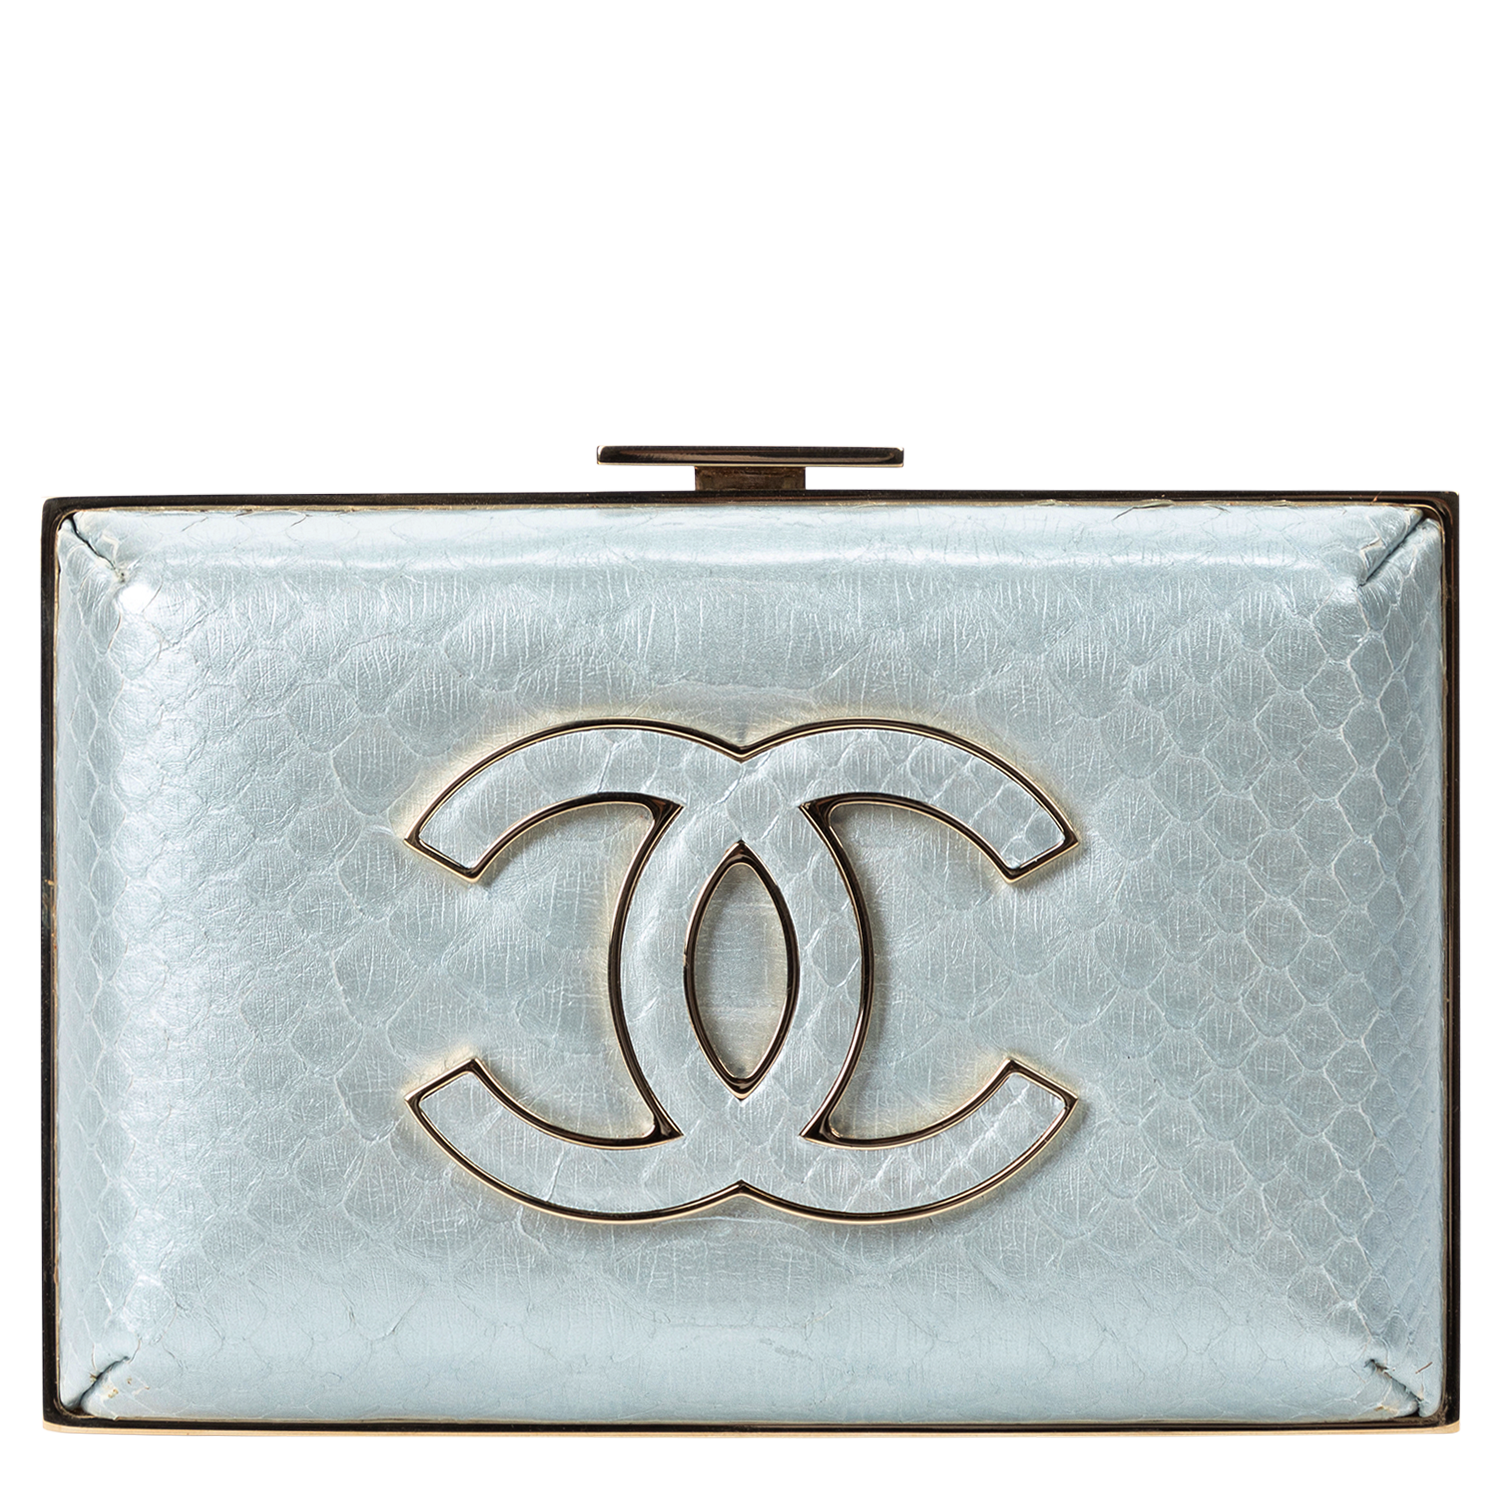 Chanel Limited Edition 2012 Ice Blue CC Python Clutch